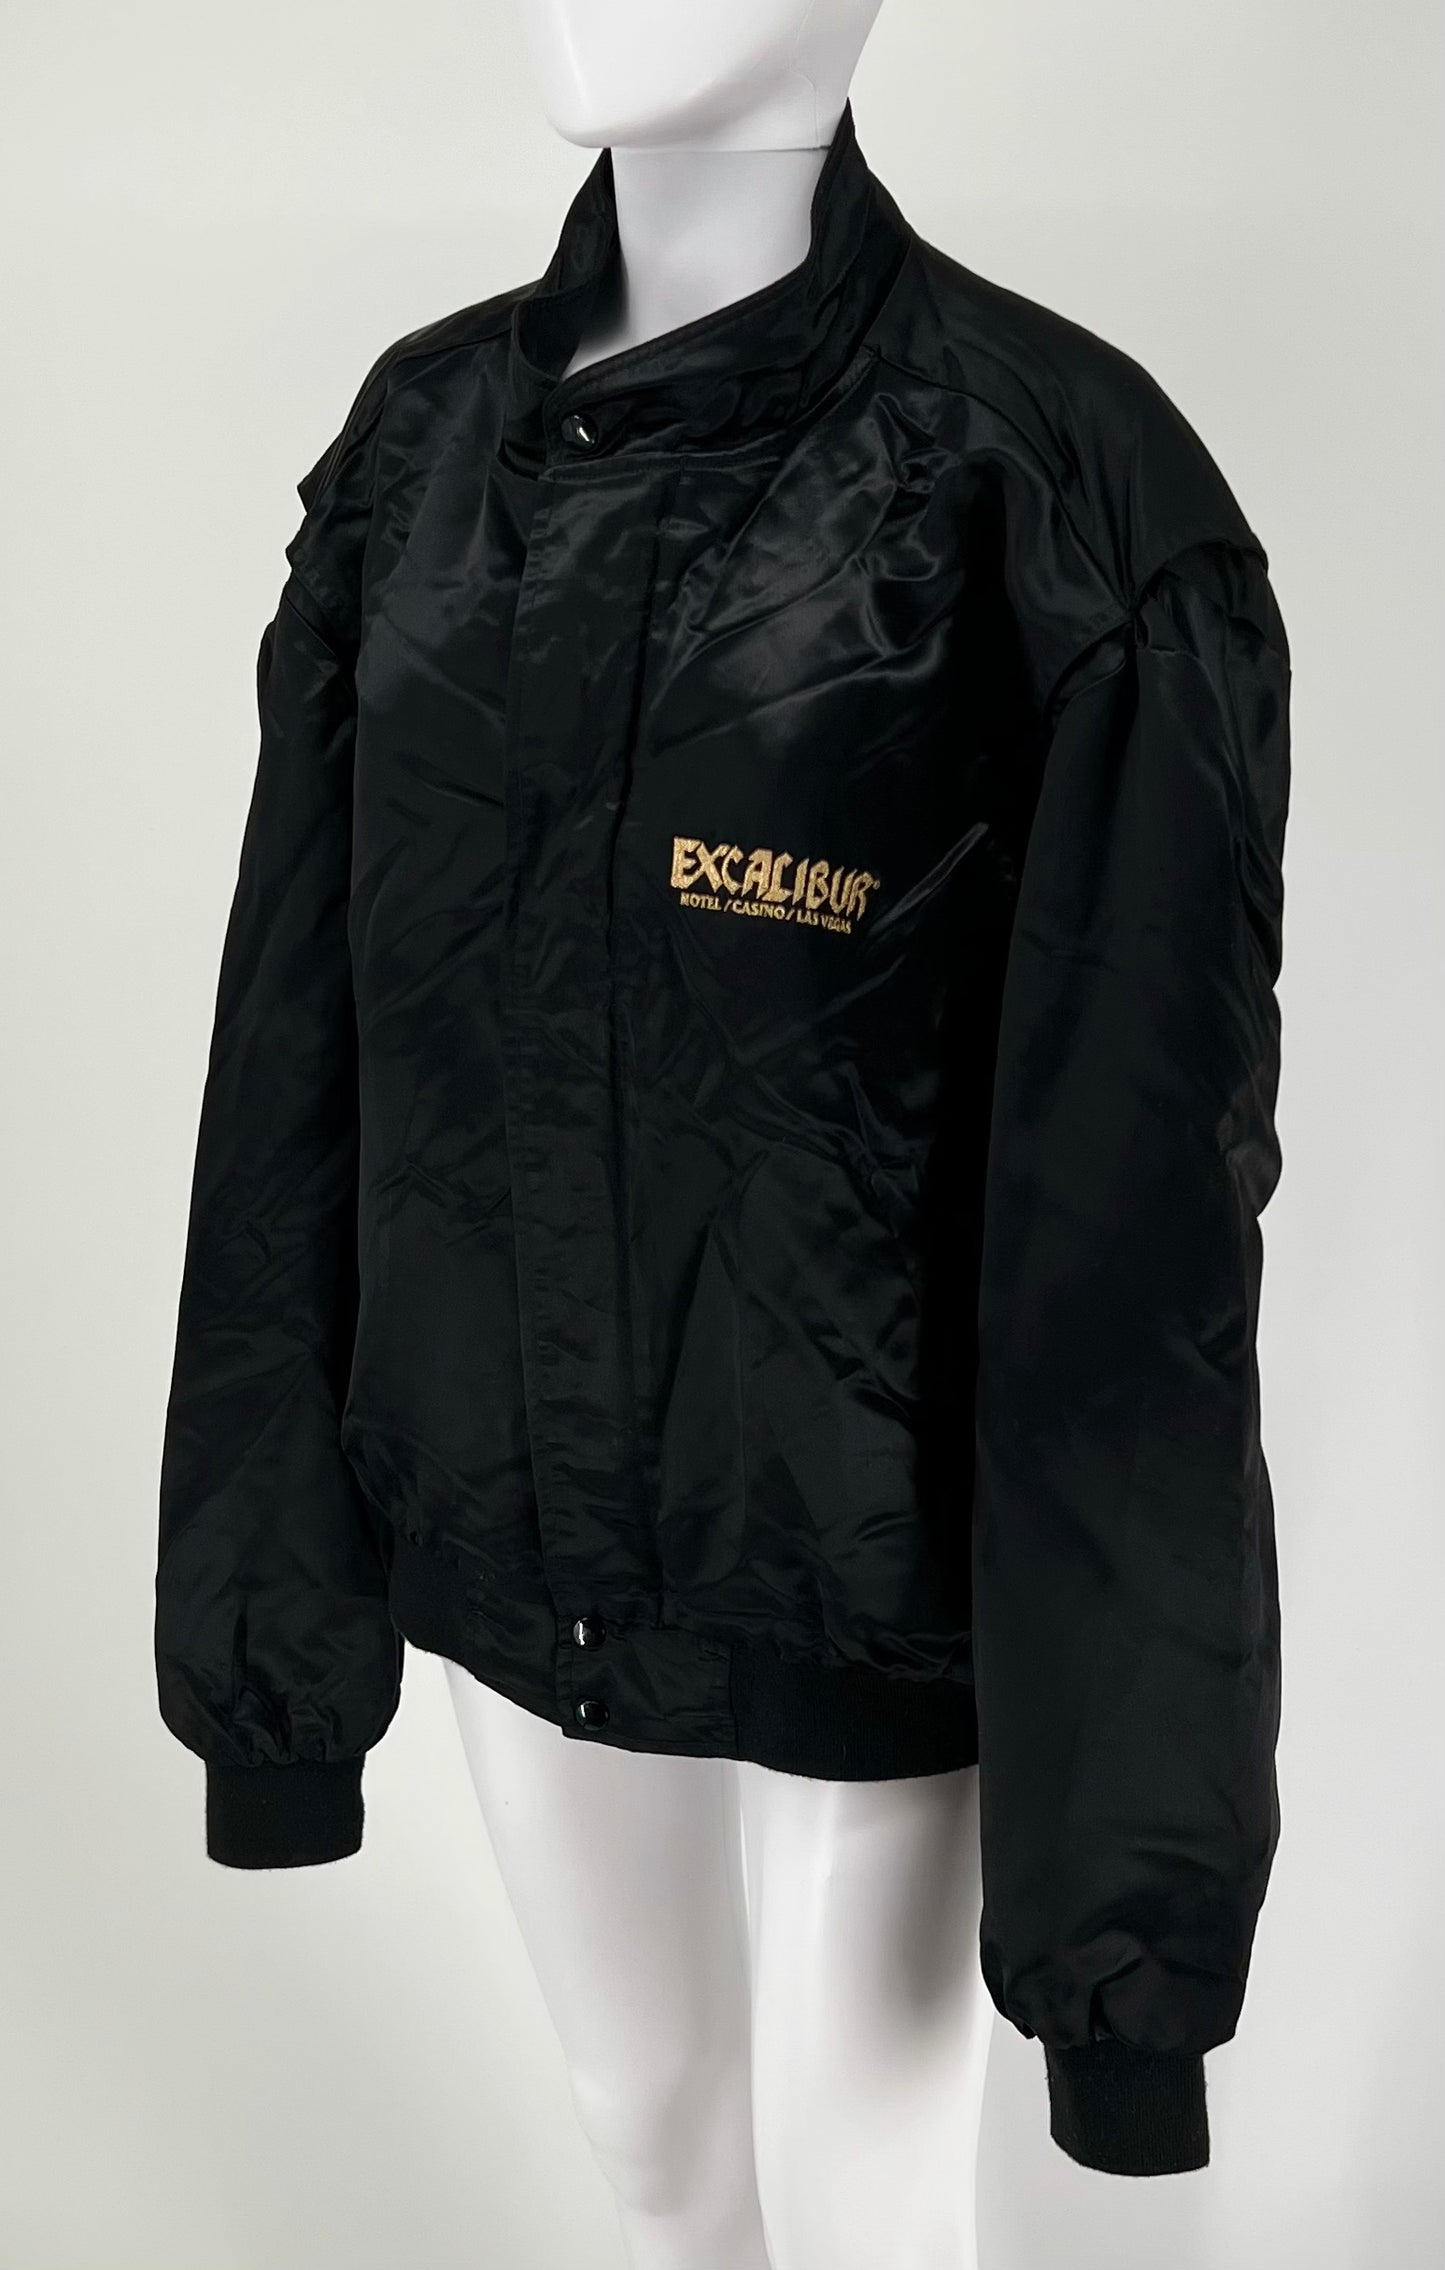 Vintage 1990s “Master Apparel Products” Excalibur Las Vegas Black Satin Casino Bomber Jacket / Snap Button / Souvenir Jacket / Made In USA / Streetwear | Sz: XL